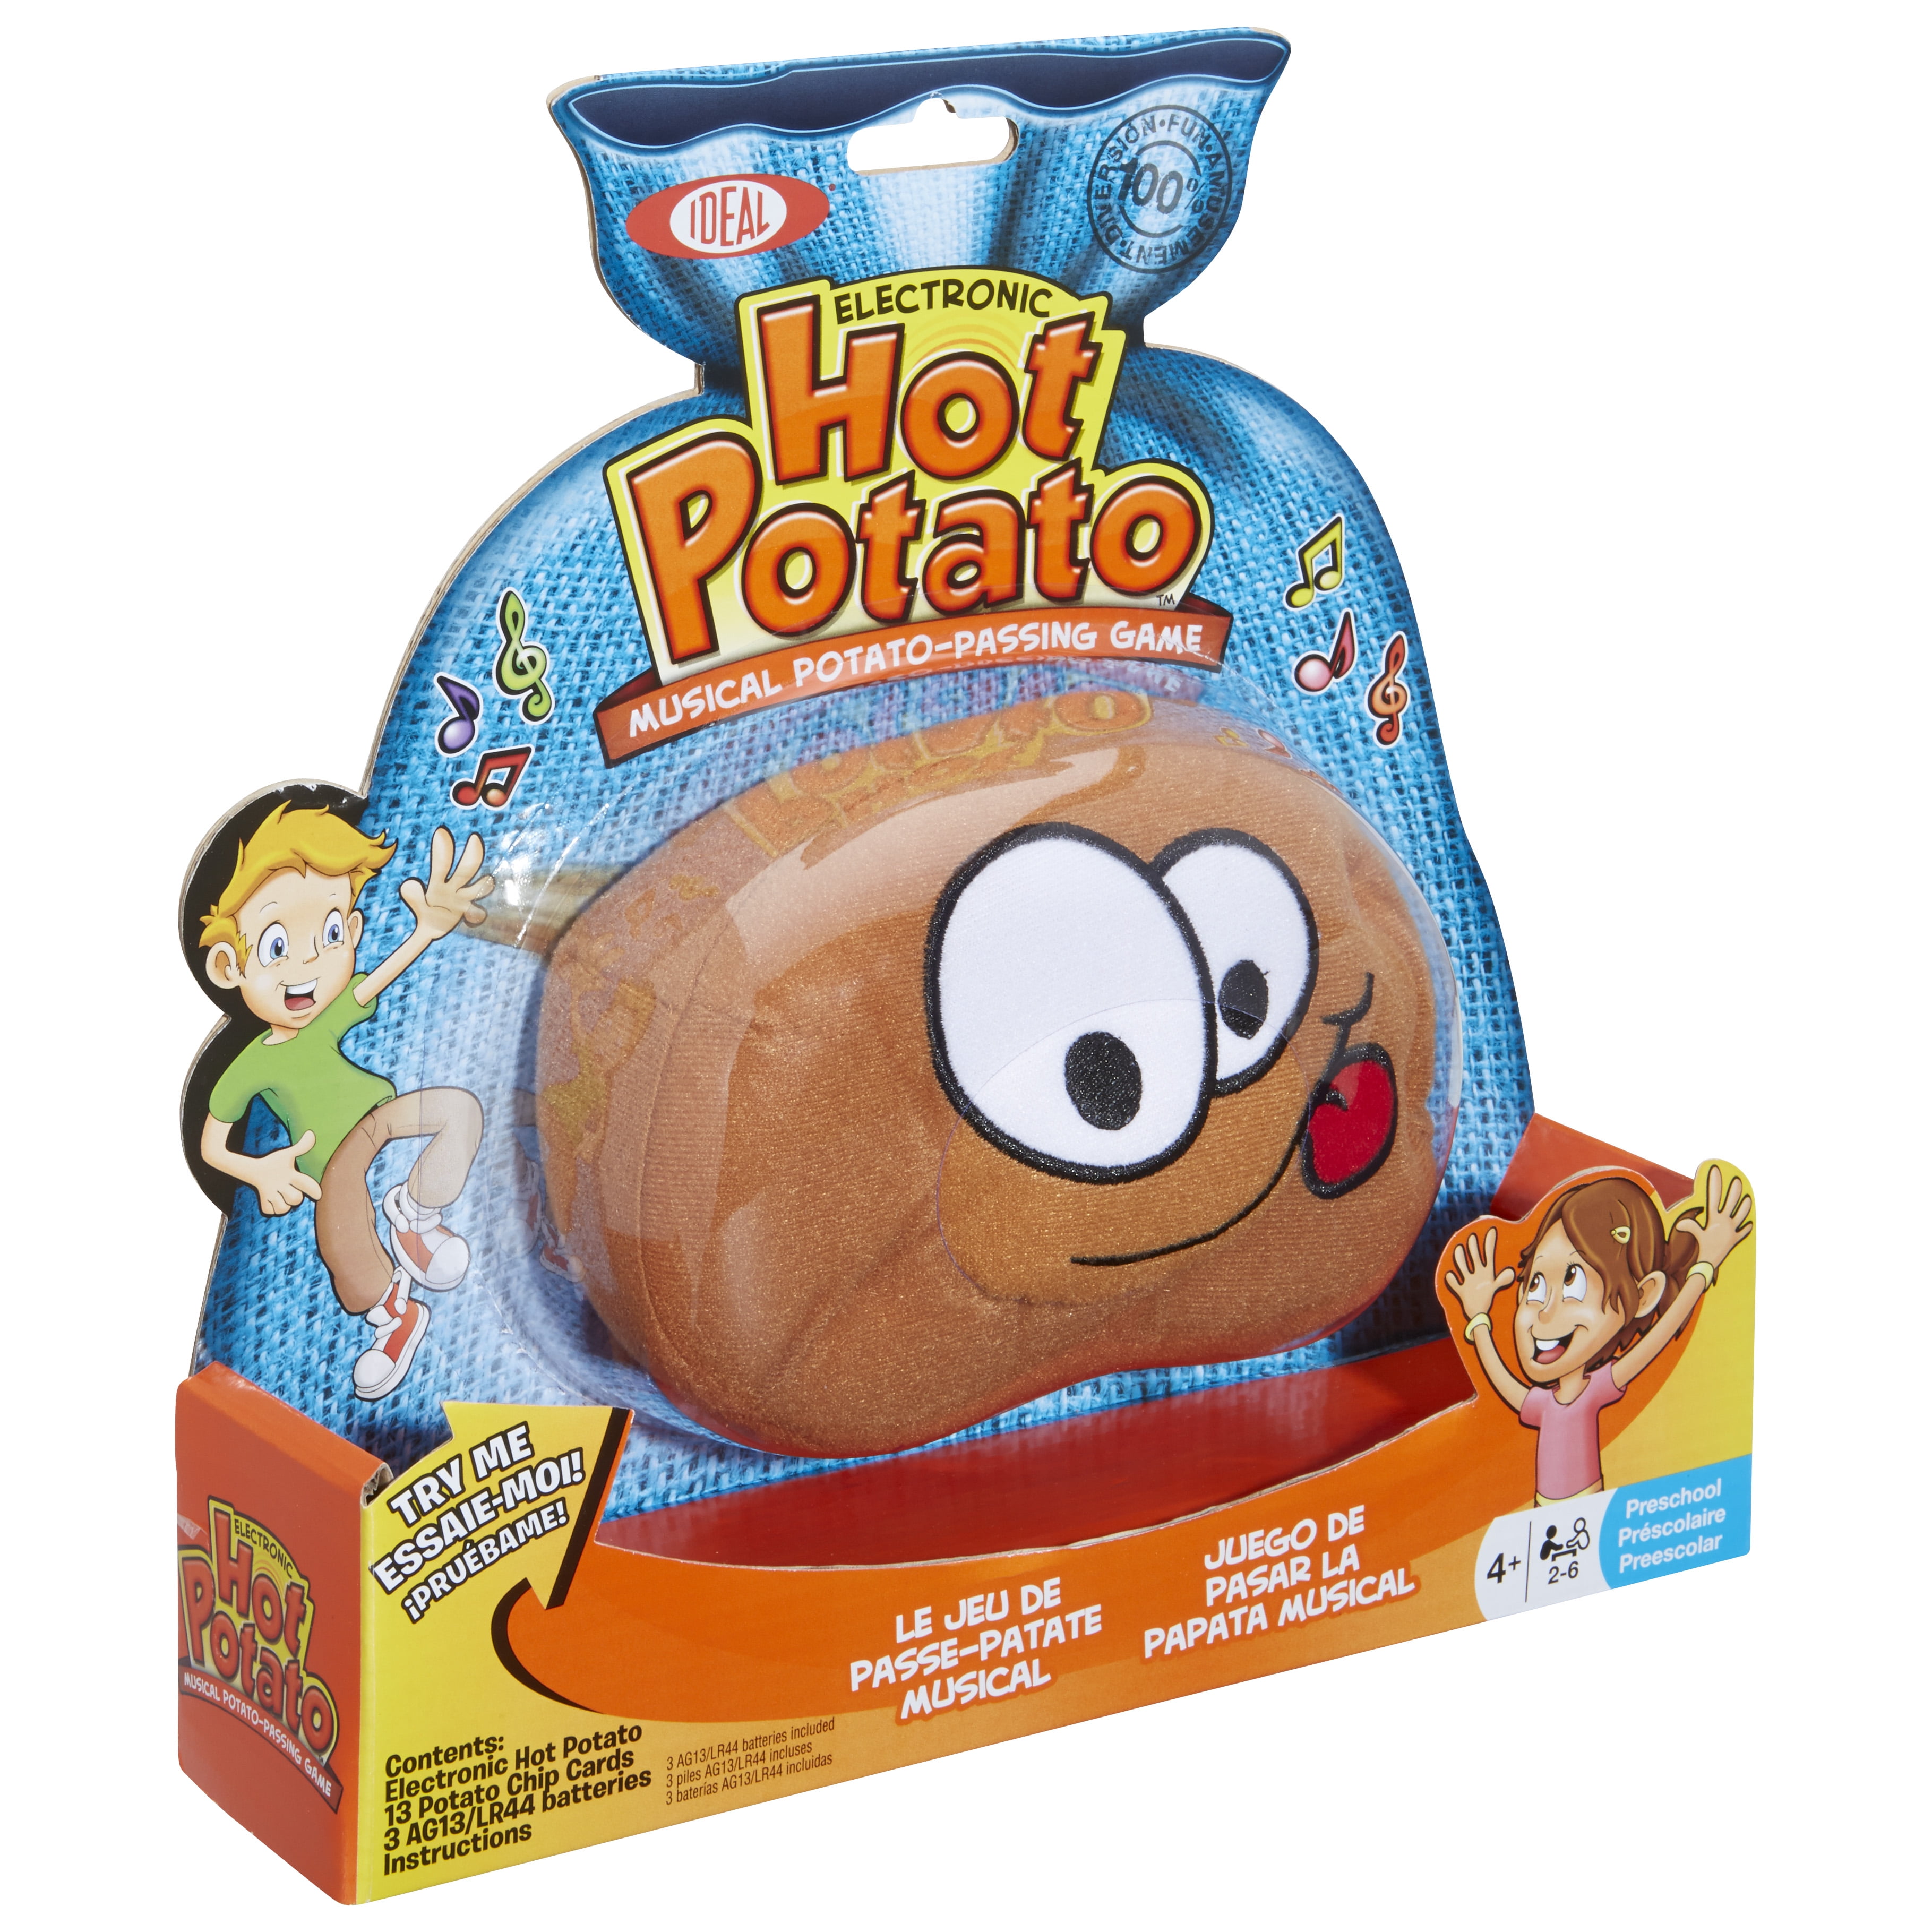 hot potato toy target